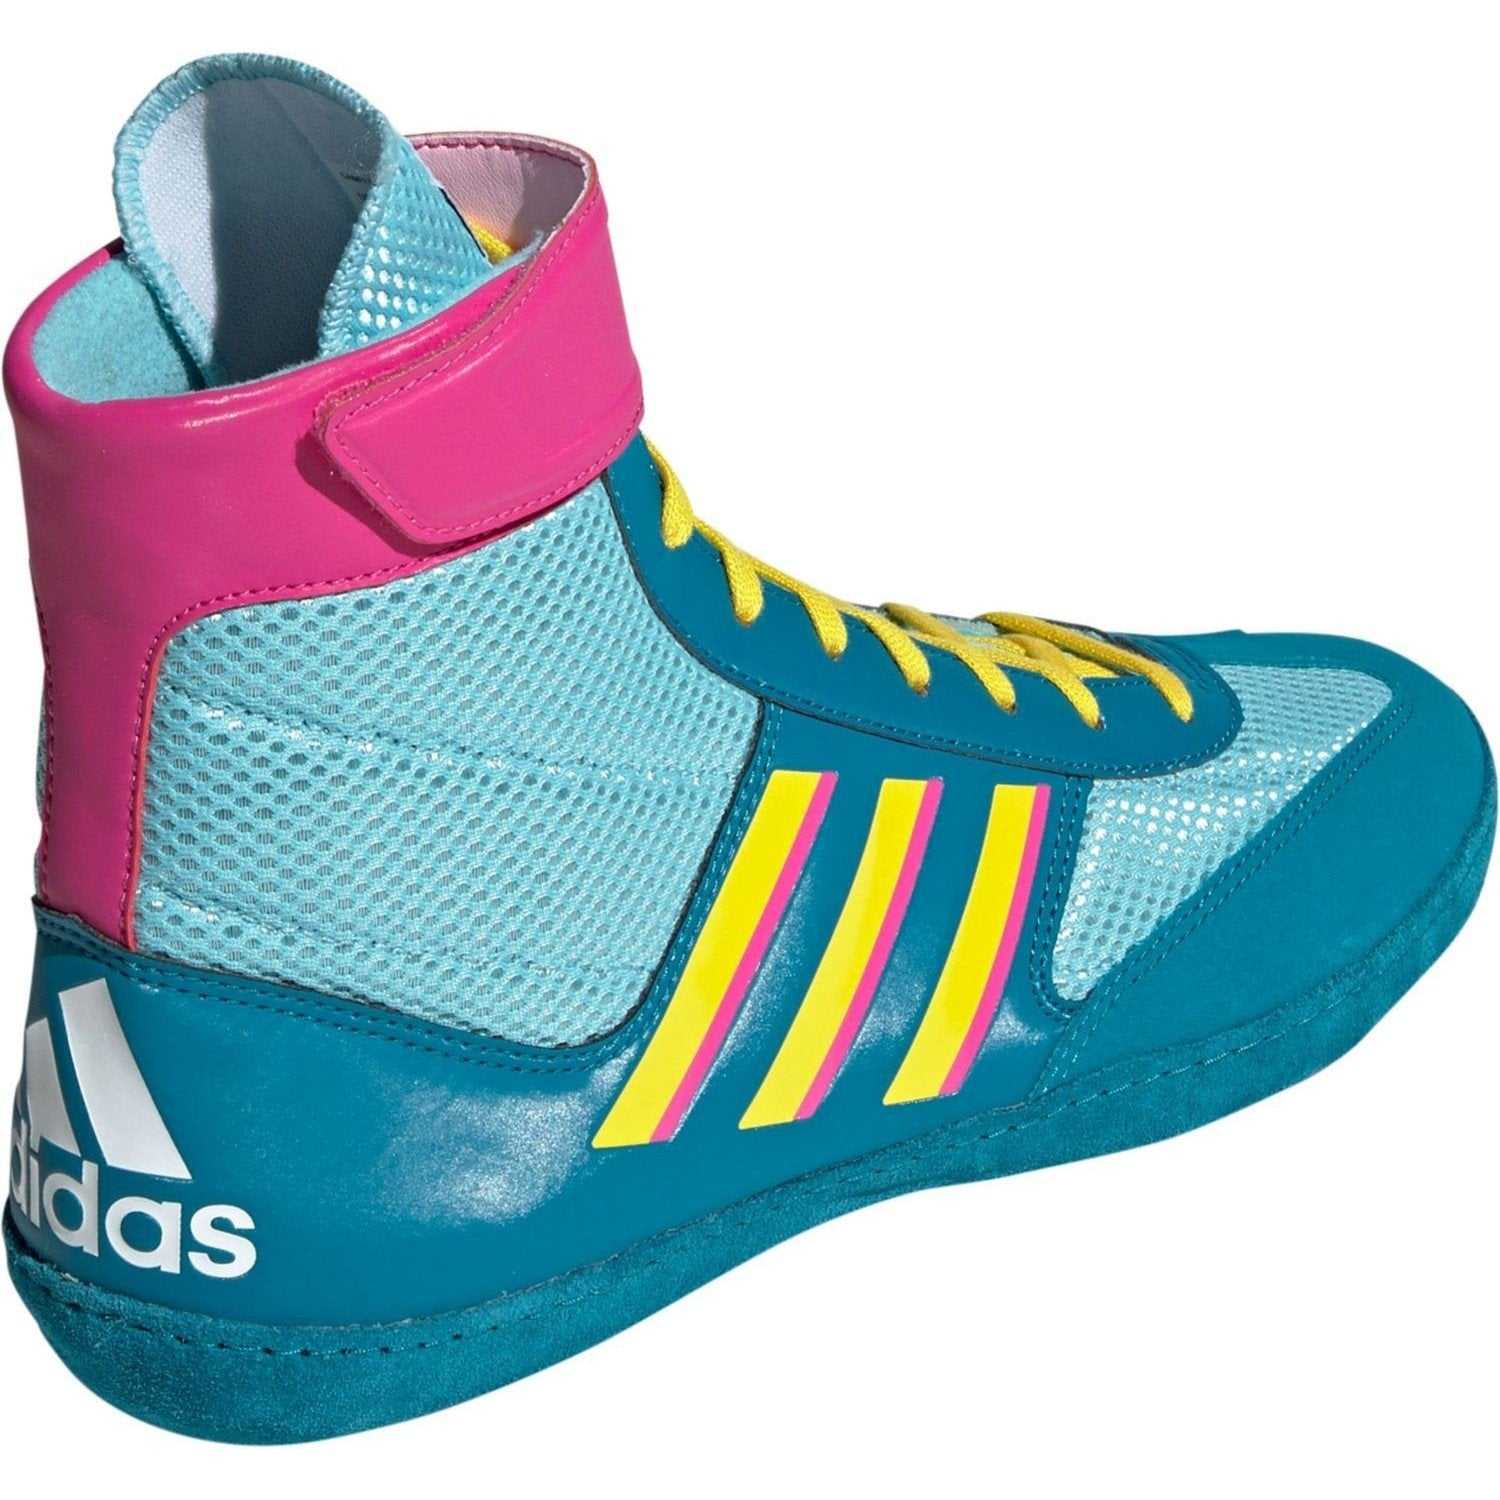 Adidas 224 Combat Speed 5 Wrestling Shoes - Aqua Yellow Teal